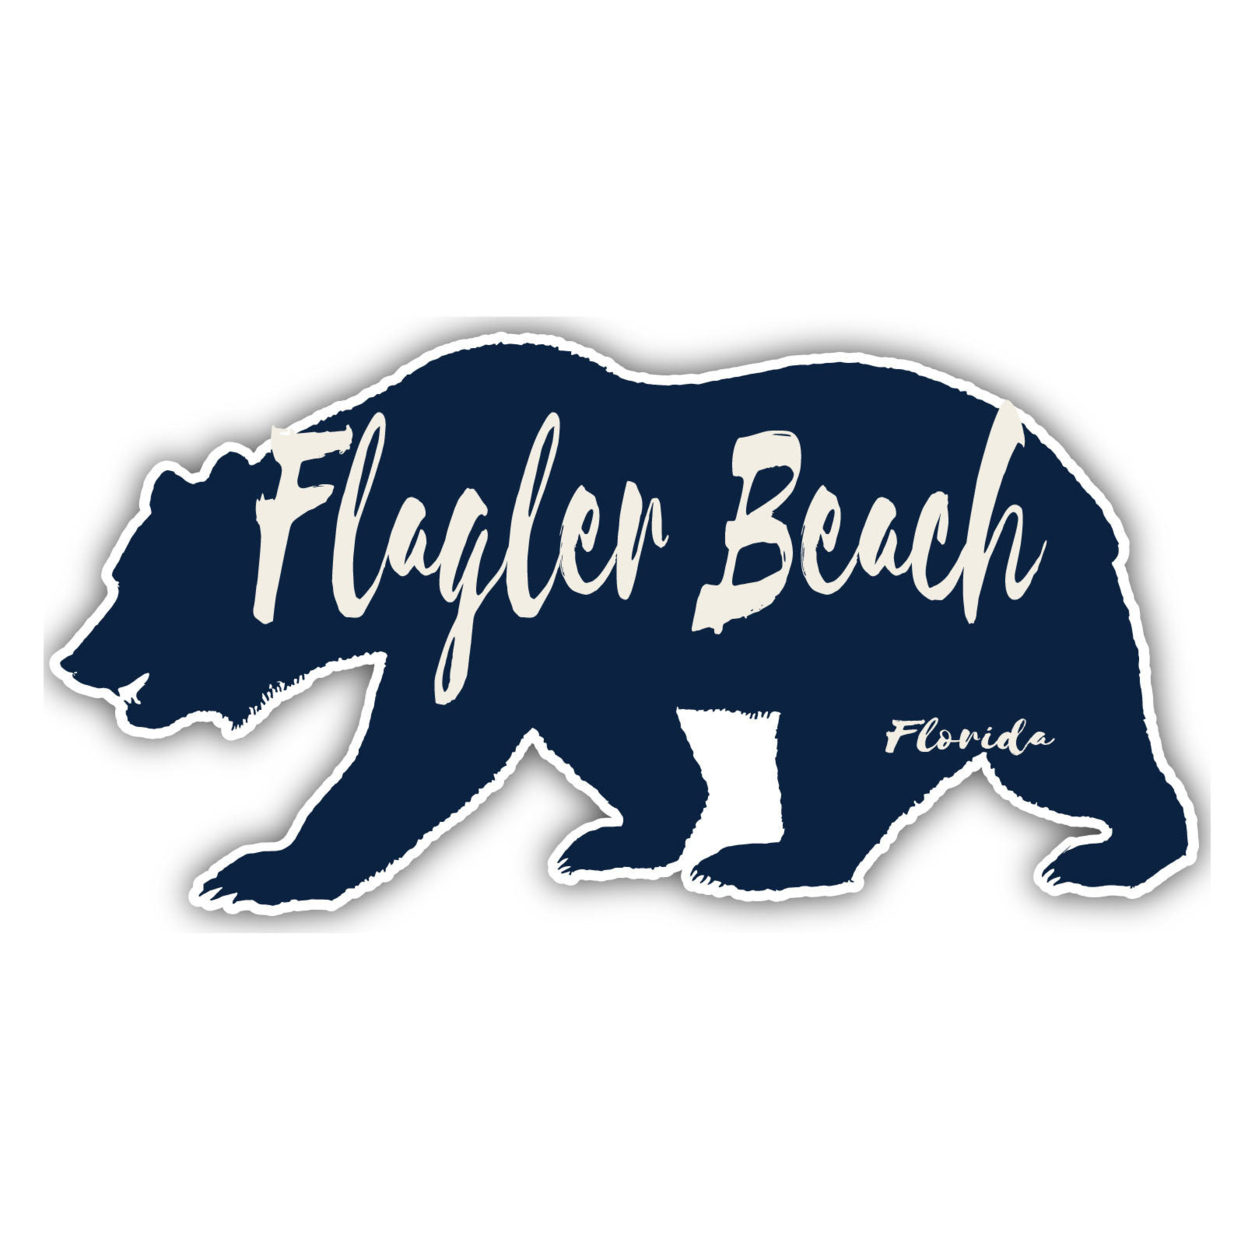 Flagler Beach Florida Souvenir Decorative Stickers (Choose Theme And Size) - Single Unit, 10-Inch, Tent